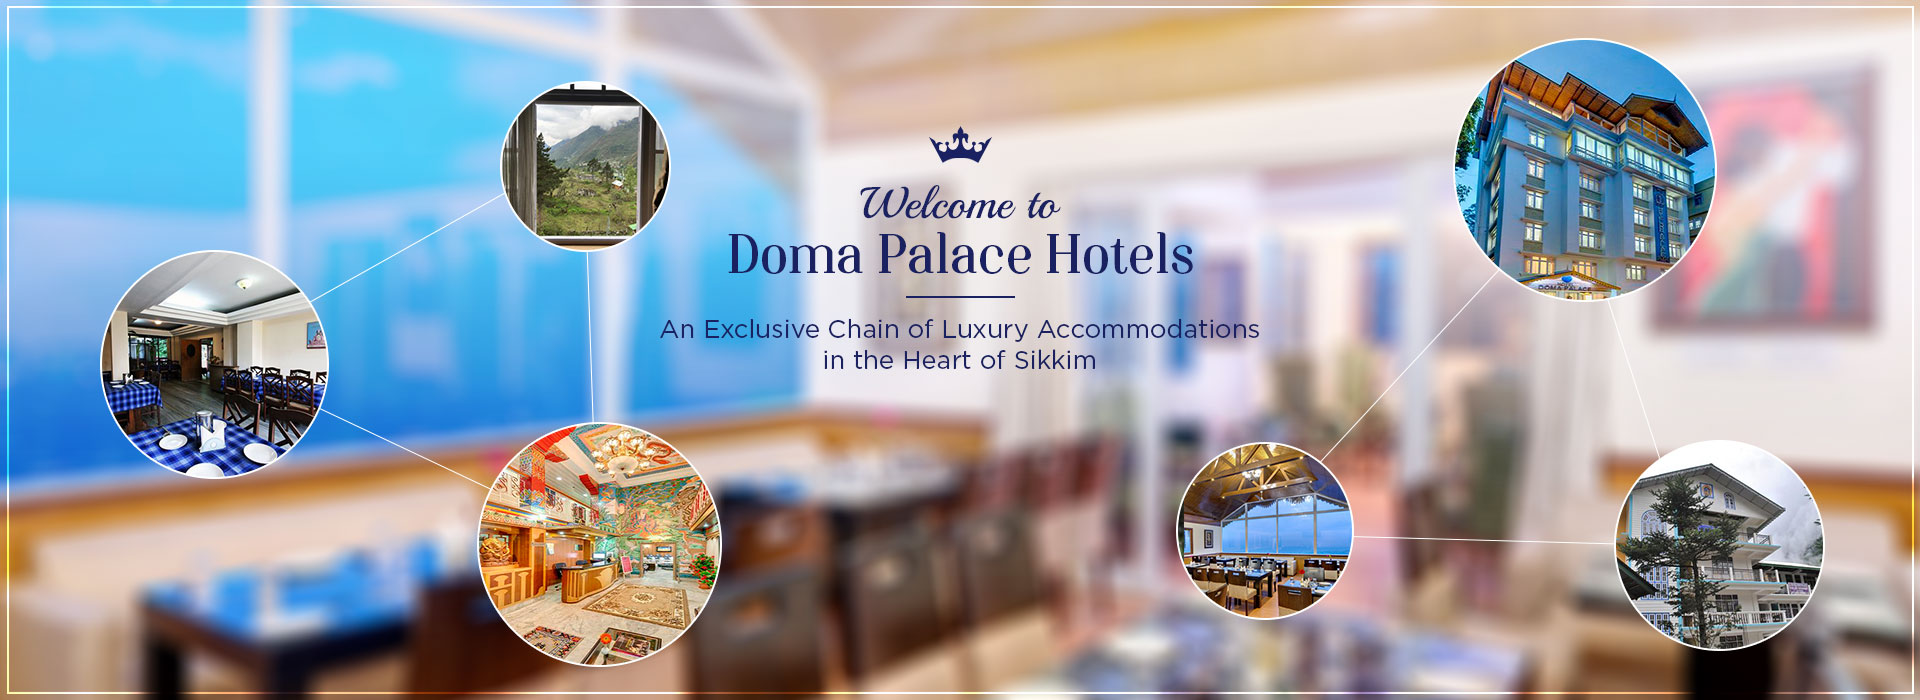 Doma Palace Hotels Group